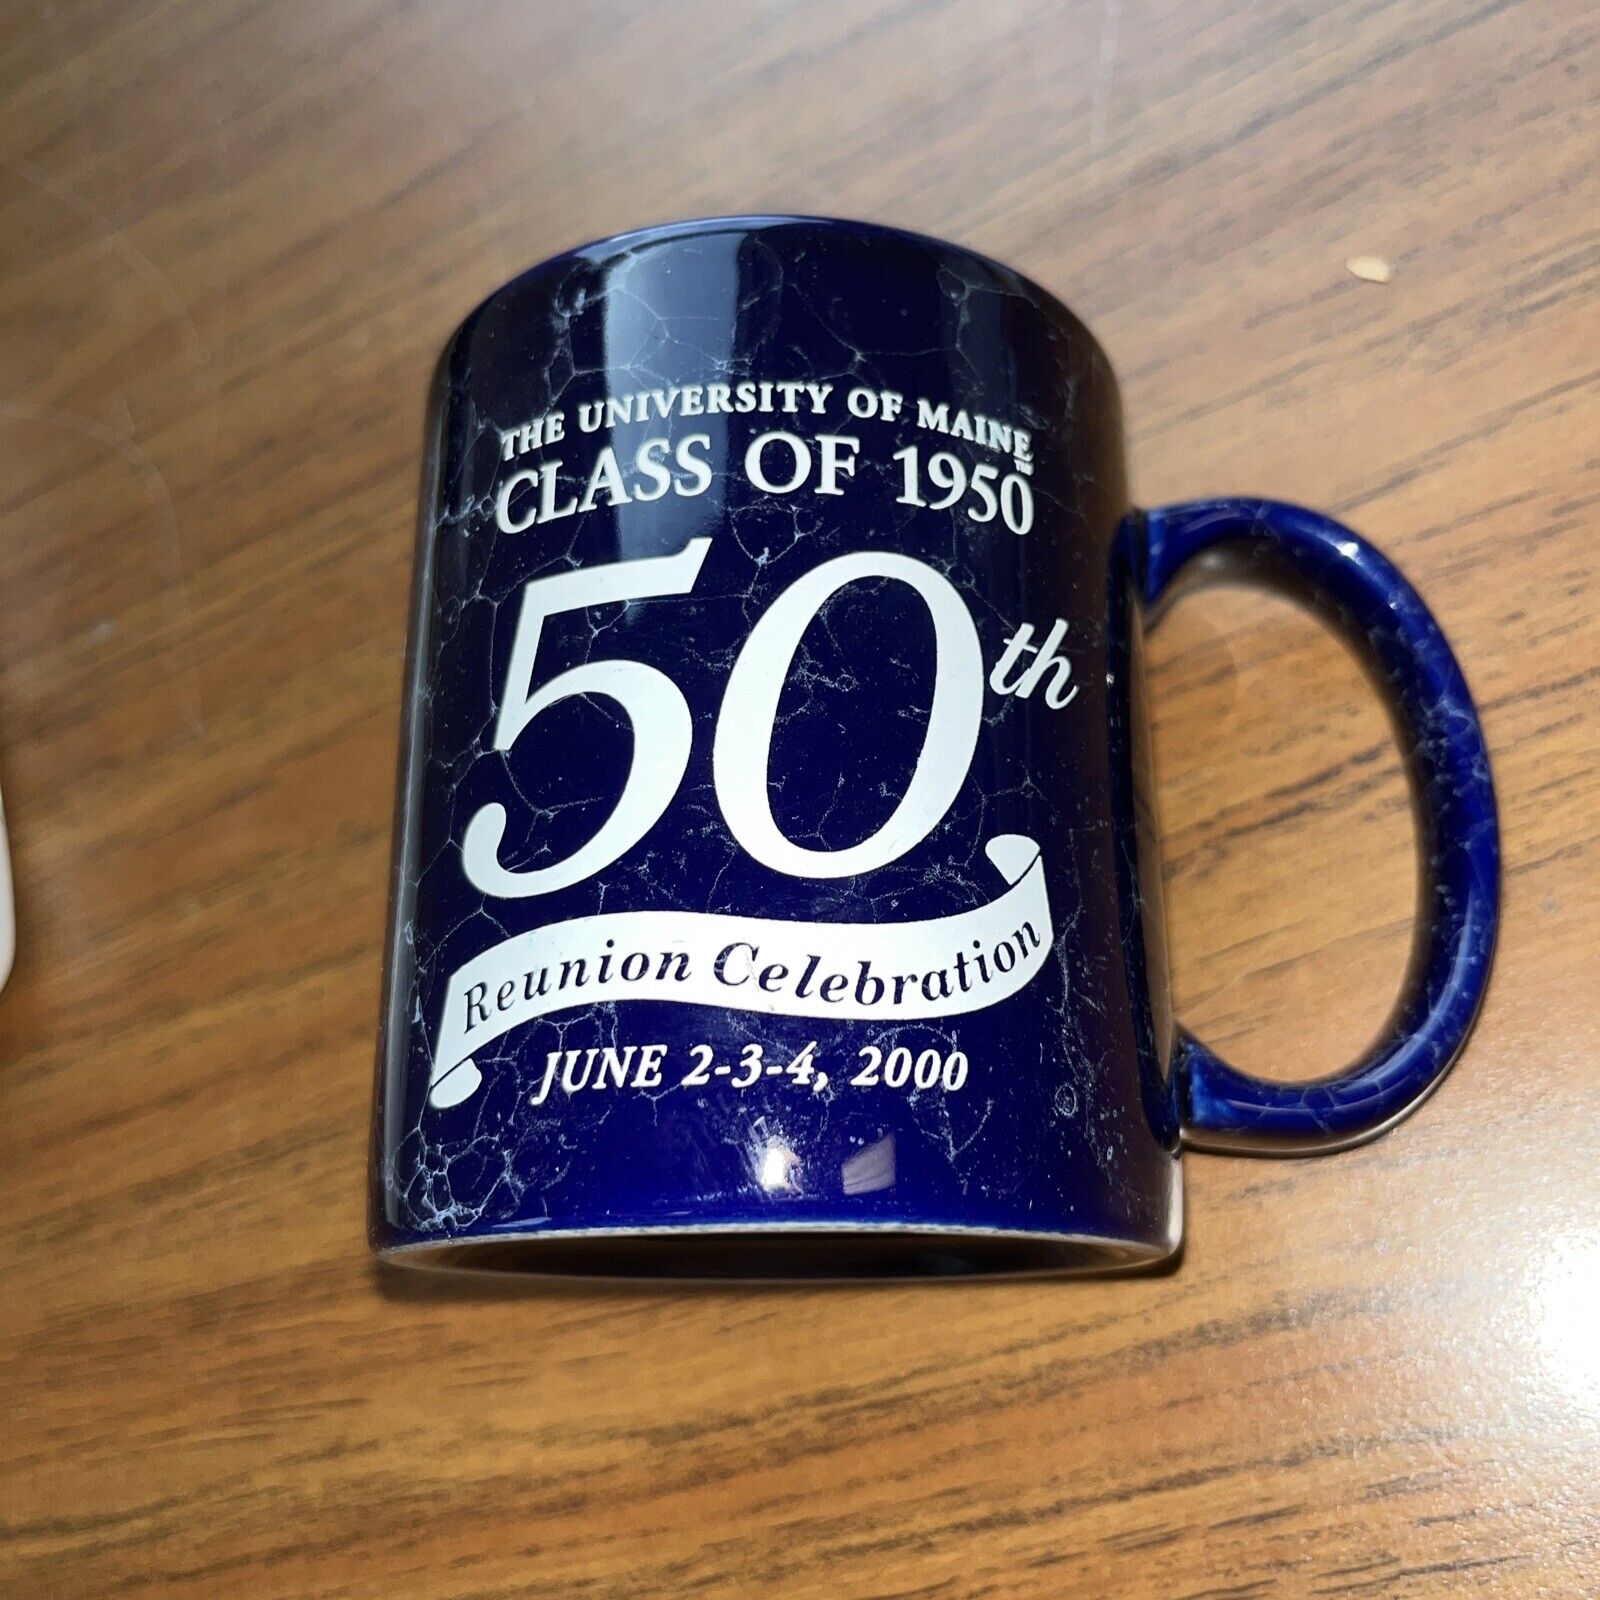 University of Maine Black Bears Class of 1950: 50th Reunion Celebration Mug